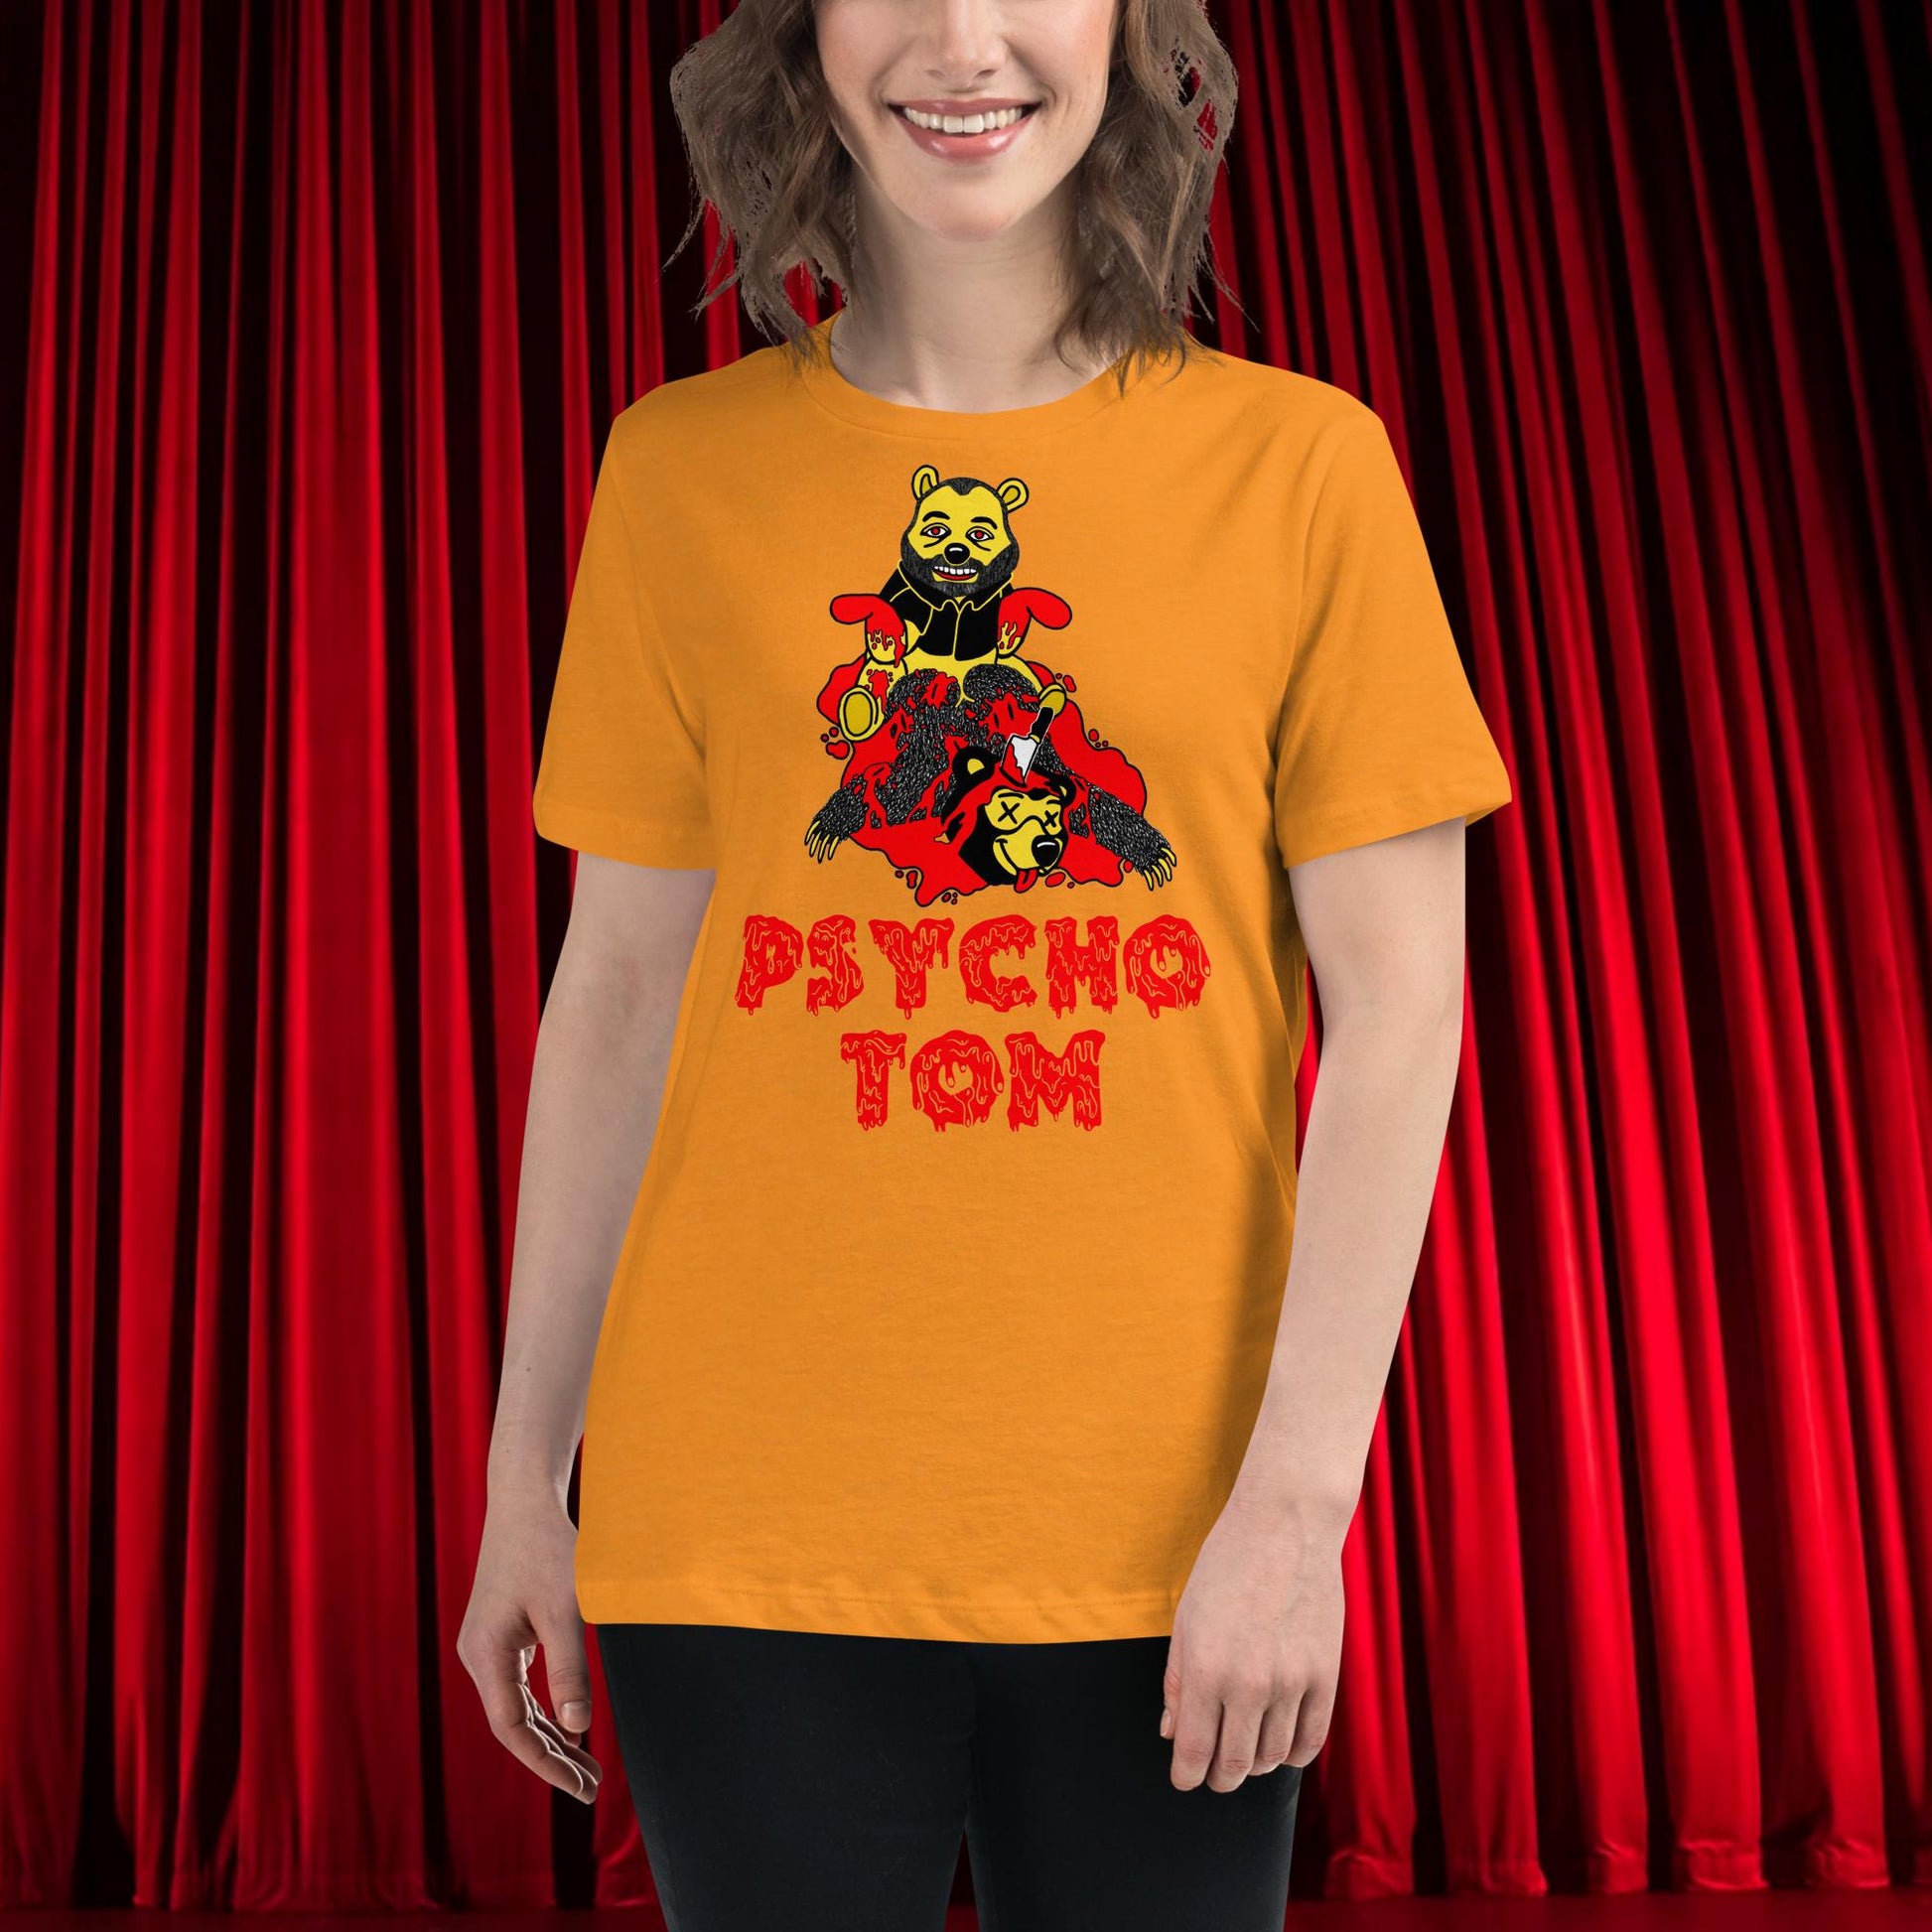 Psycho Tom Segura Women's Fit T-shirt, Tom Segura Shirt, Tom Segura Tee, 2b1c tshirt, 2 Bears 1 Cave merch, YMH merch Next Cult Brand 2 Bears 1 Cave, Podcasts, Stand-up Comedy, Tom Segura, YMH